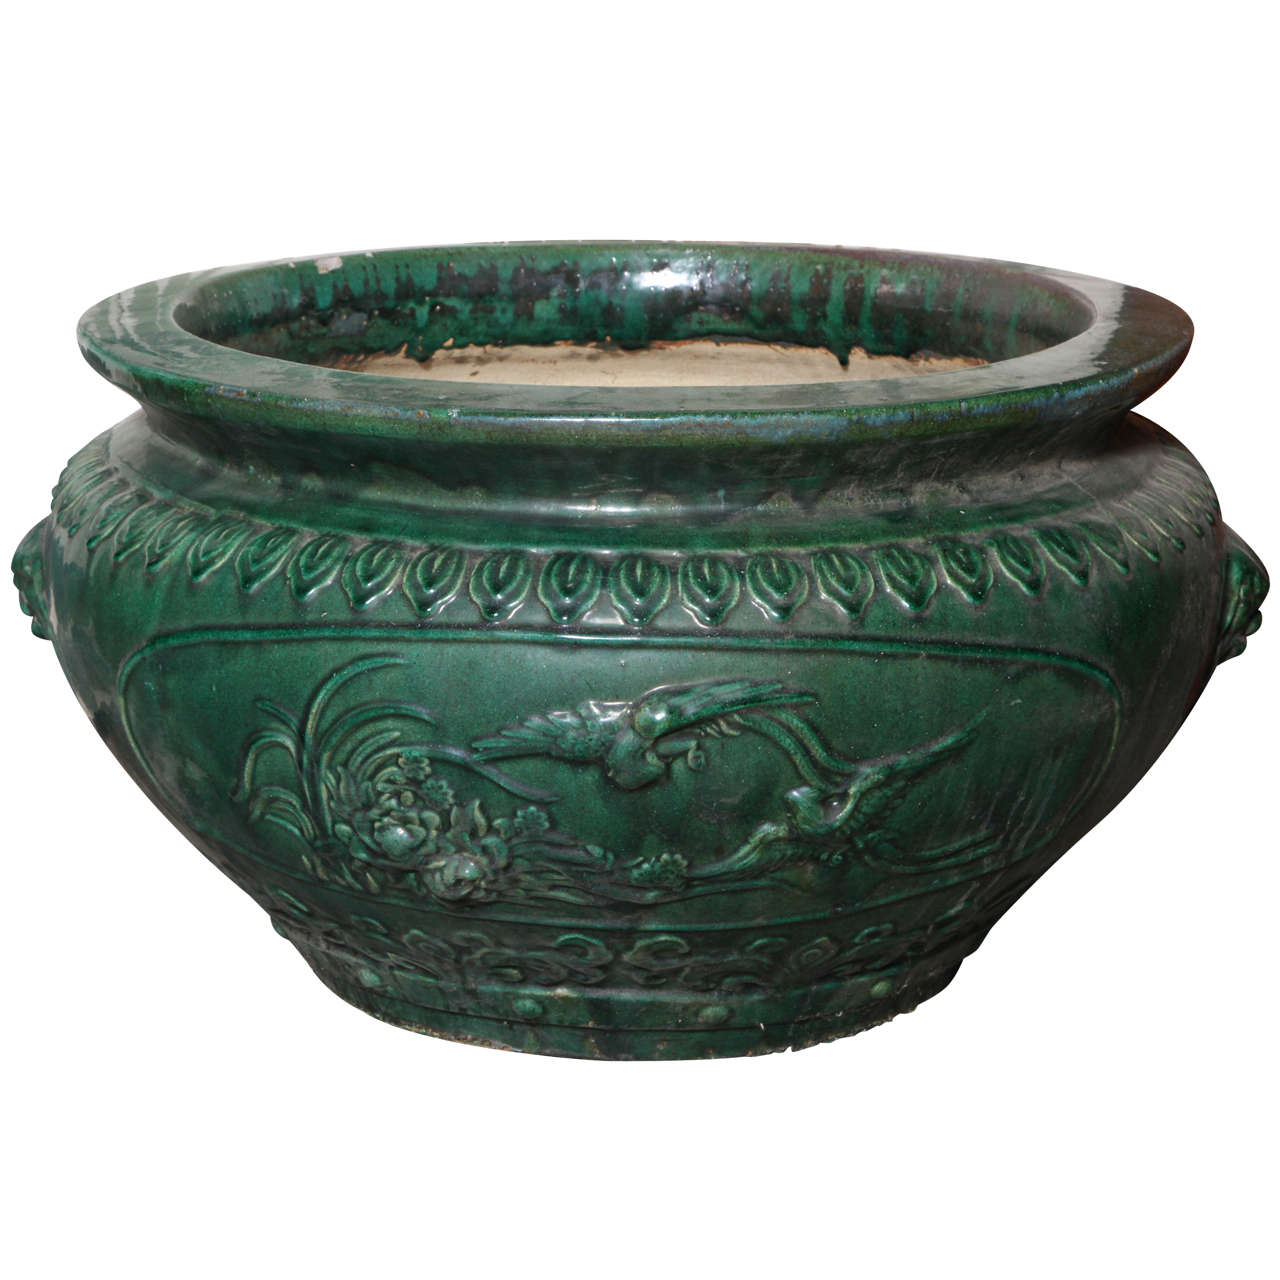 Antique Large Glazed Ceramic Planters, Hunan Province